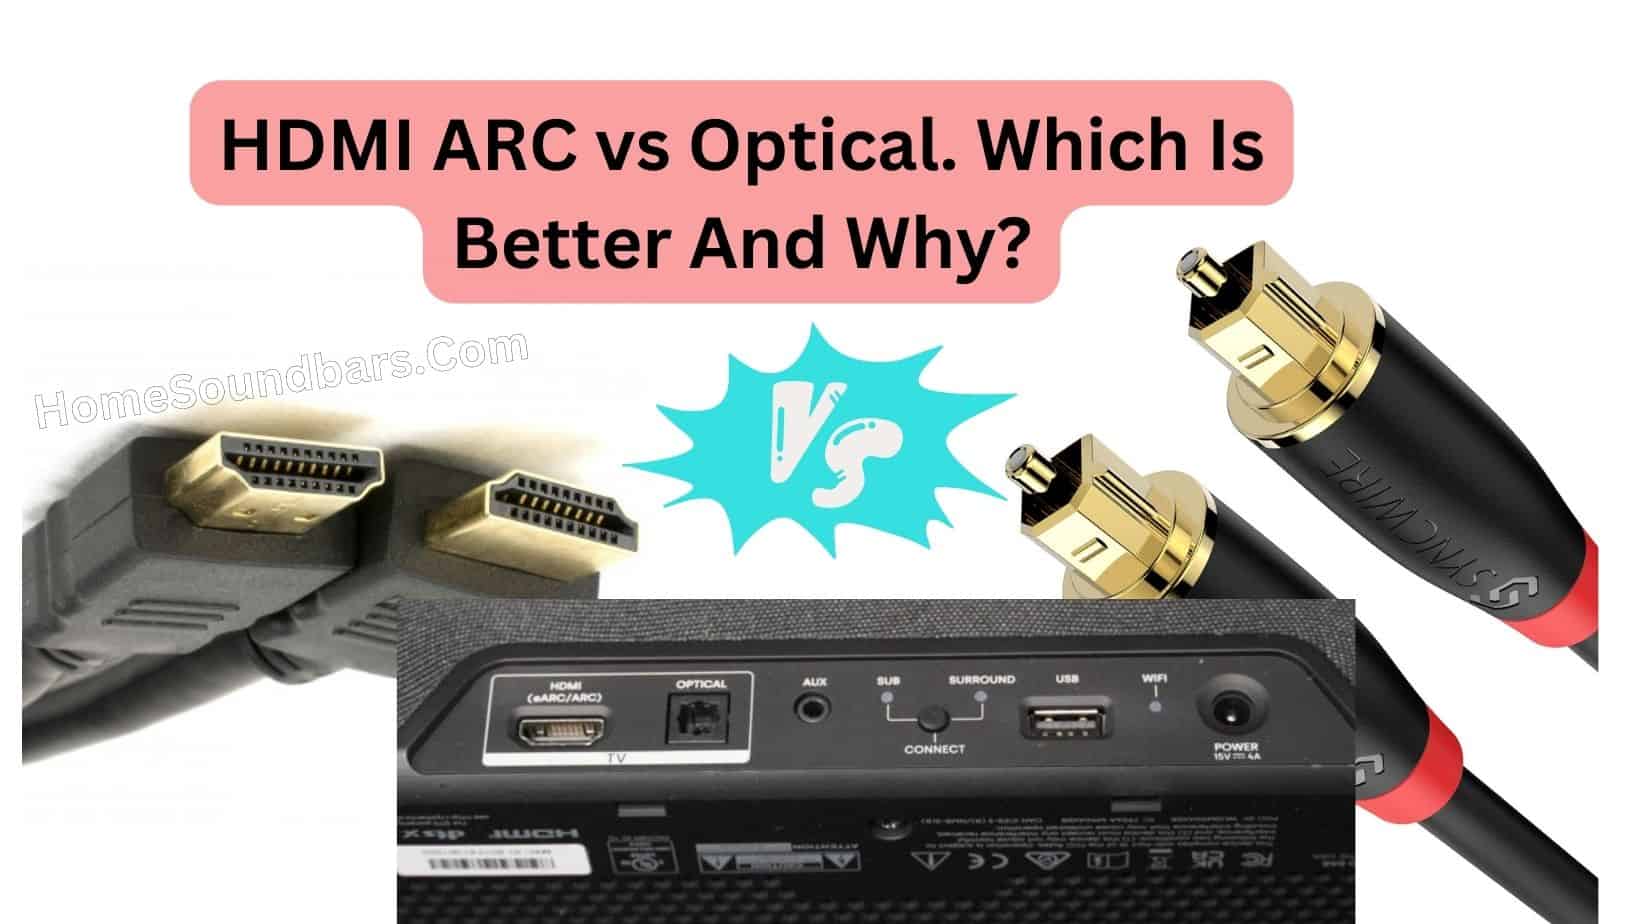 HDMi ARC Vs Optical Cable